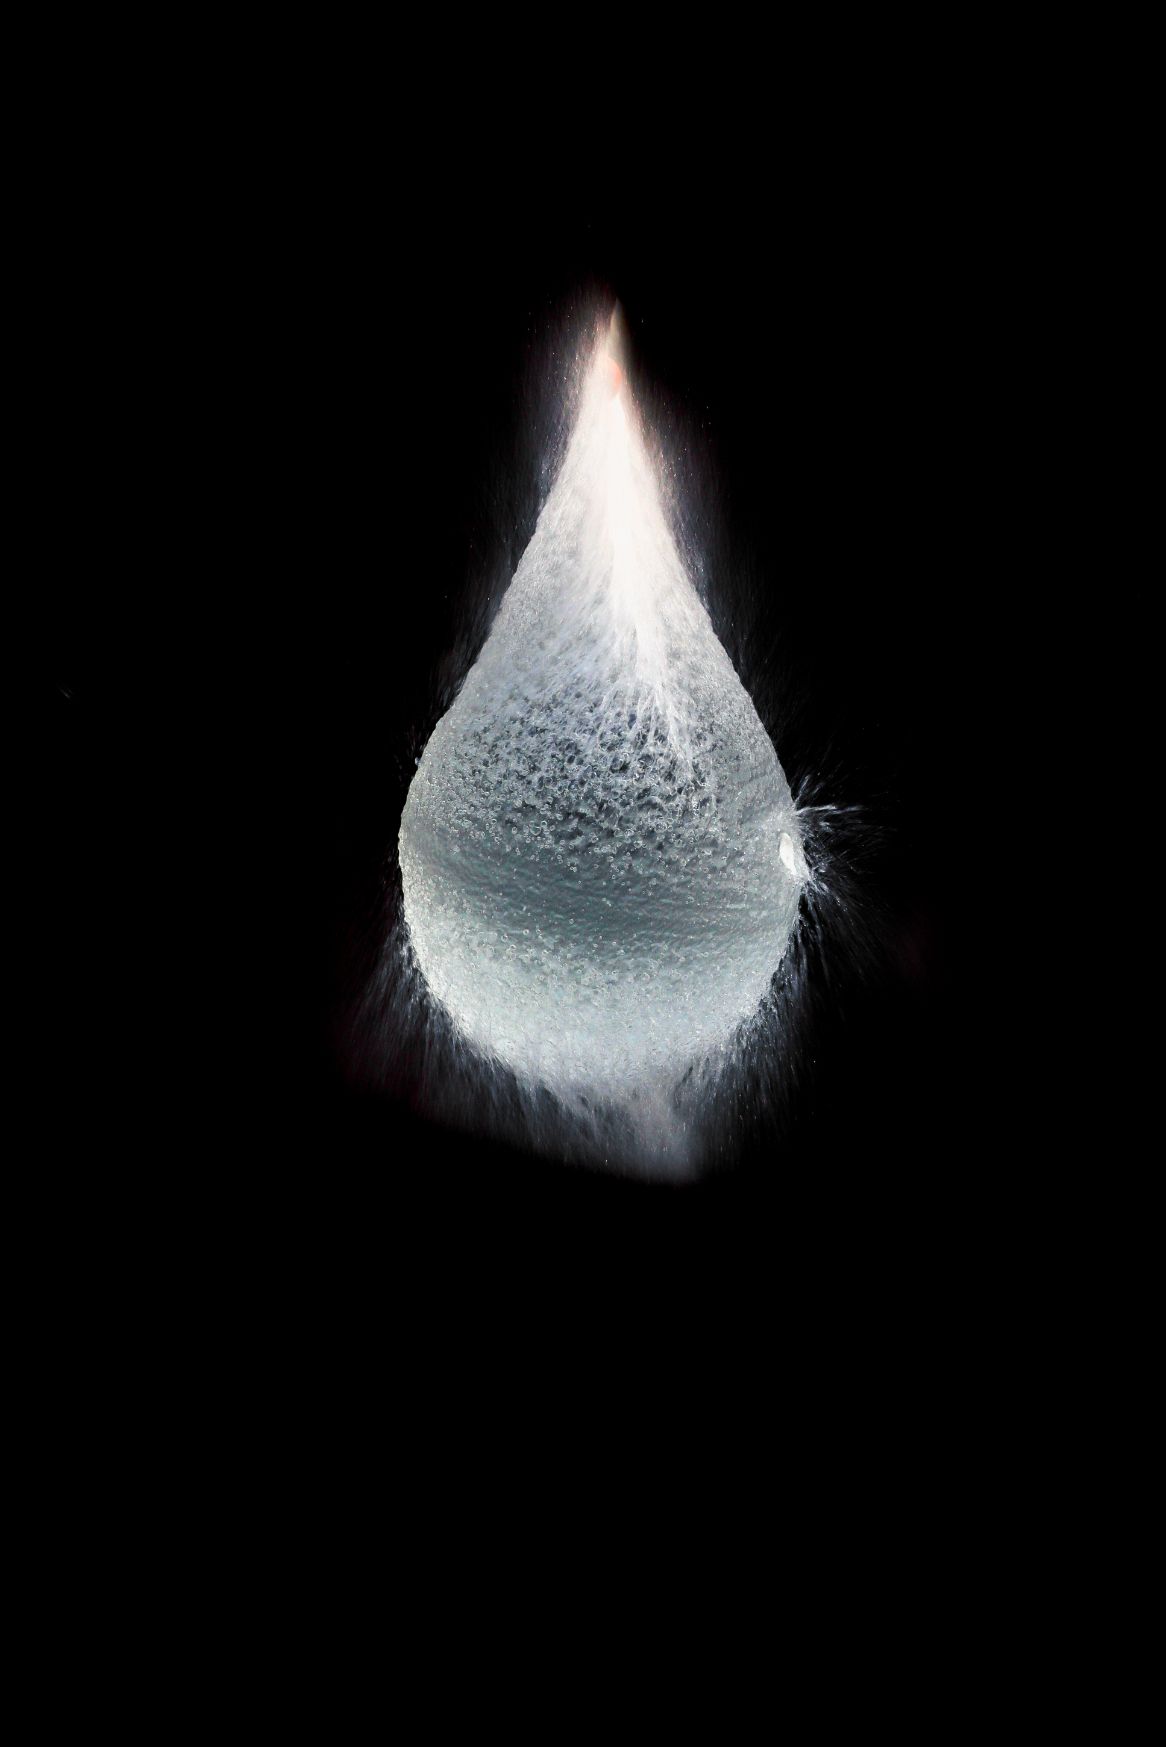 water-bomb-the-balloon-burst-motion-photography-fayid-kannur